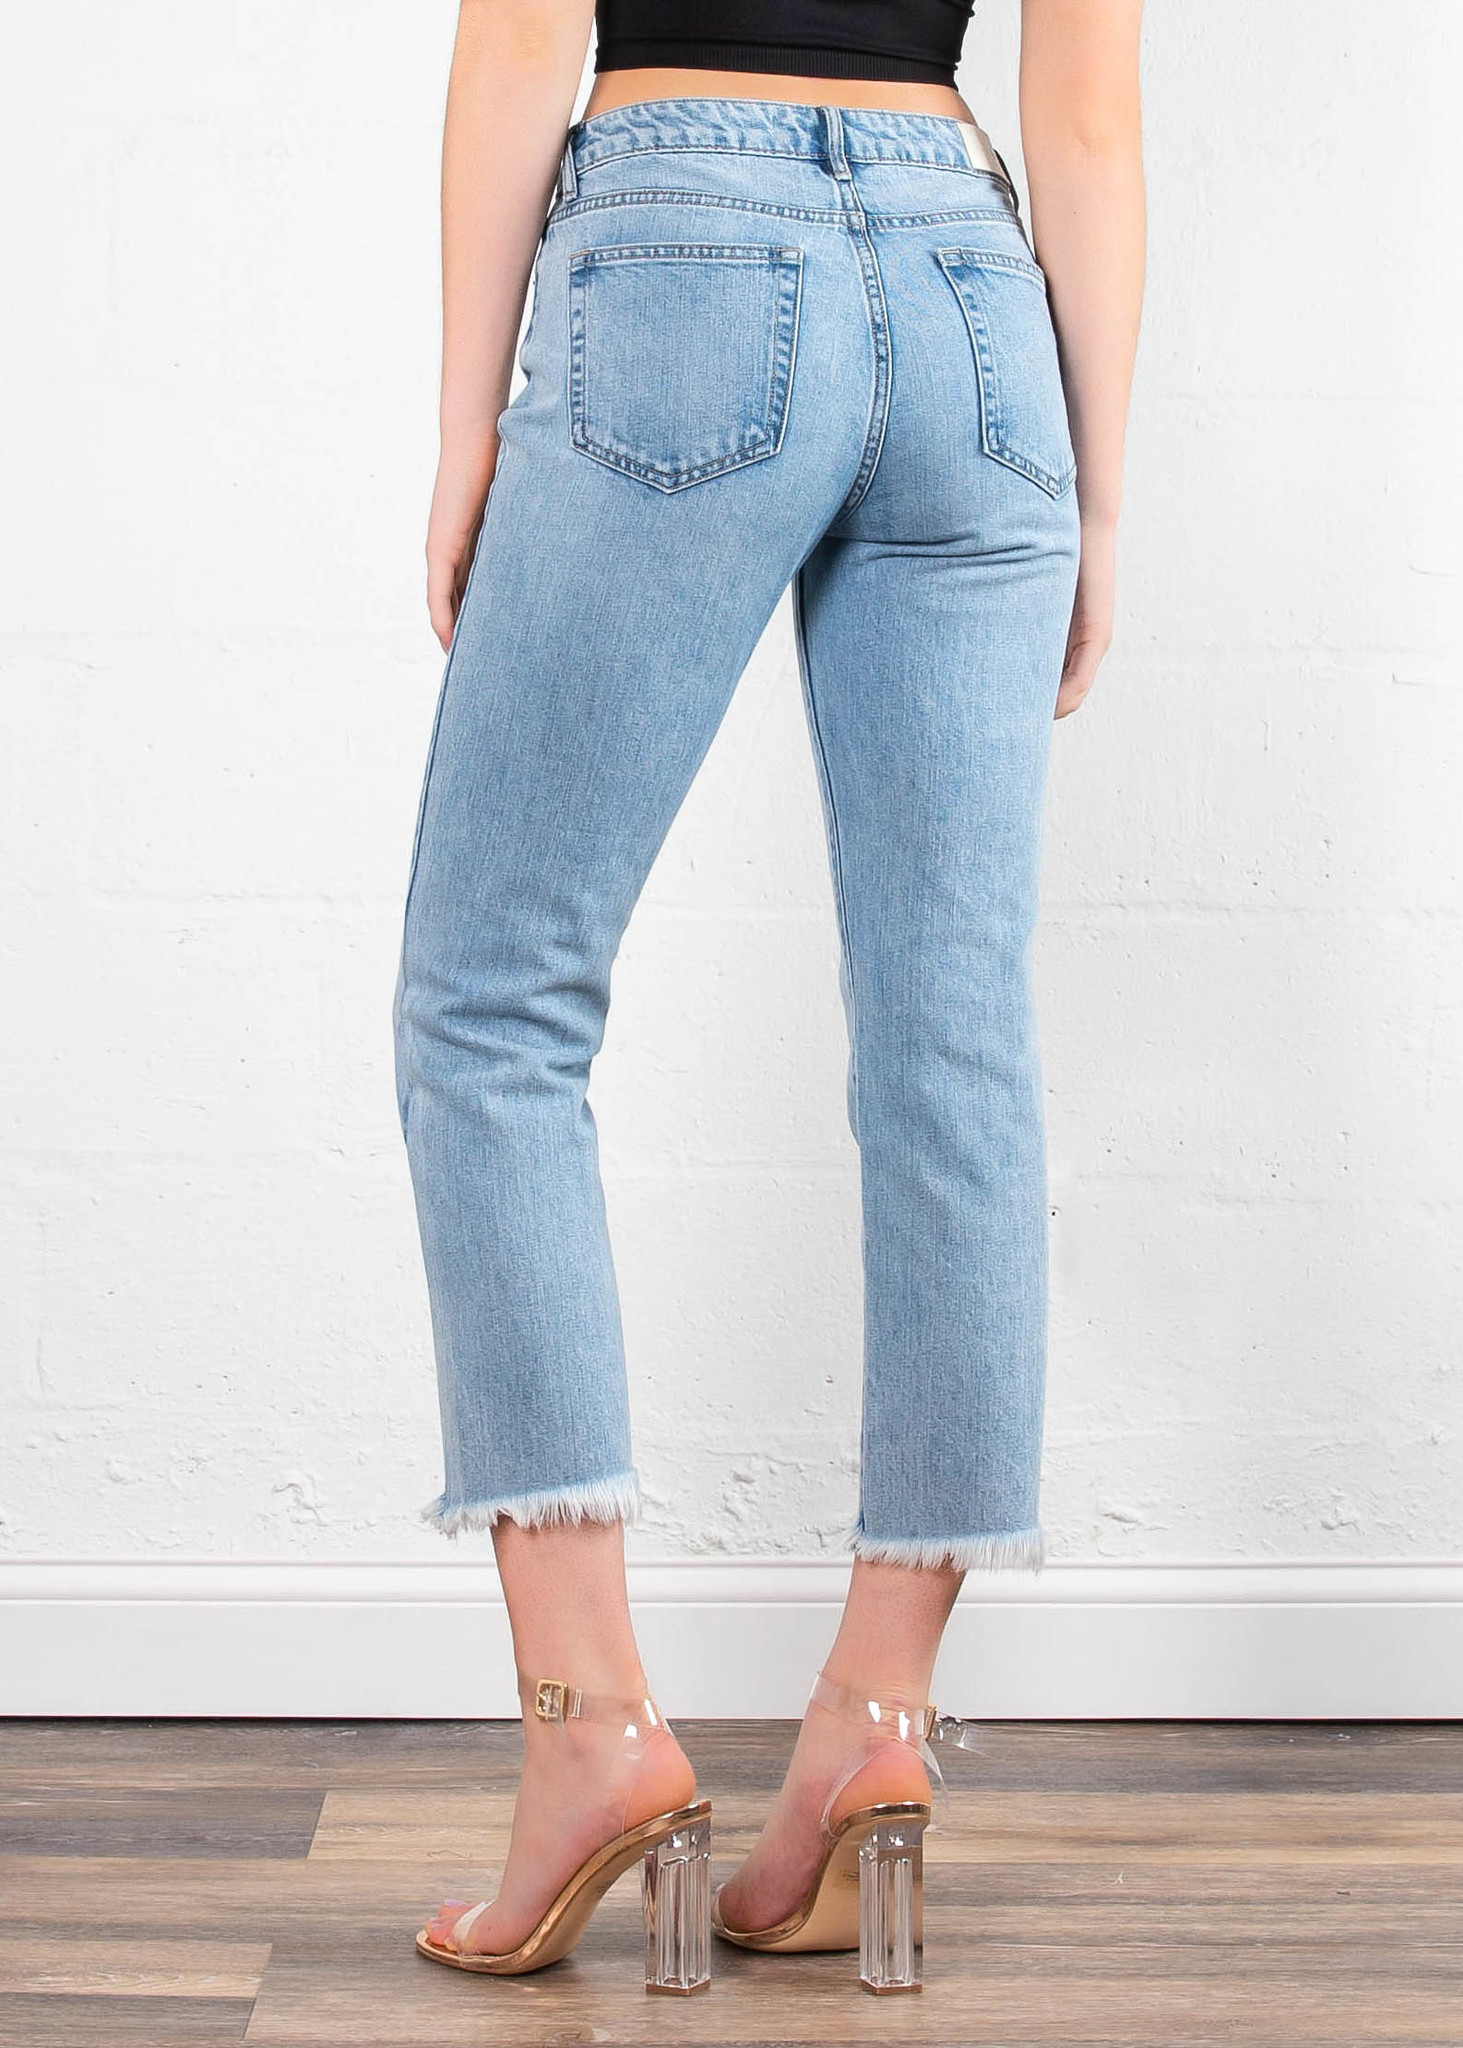 Gorjana Raw Hemline Jeans | Shop More Bottoms From Primp Boutique - Primp